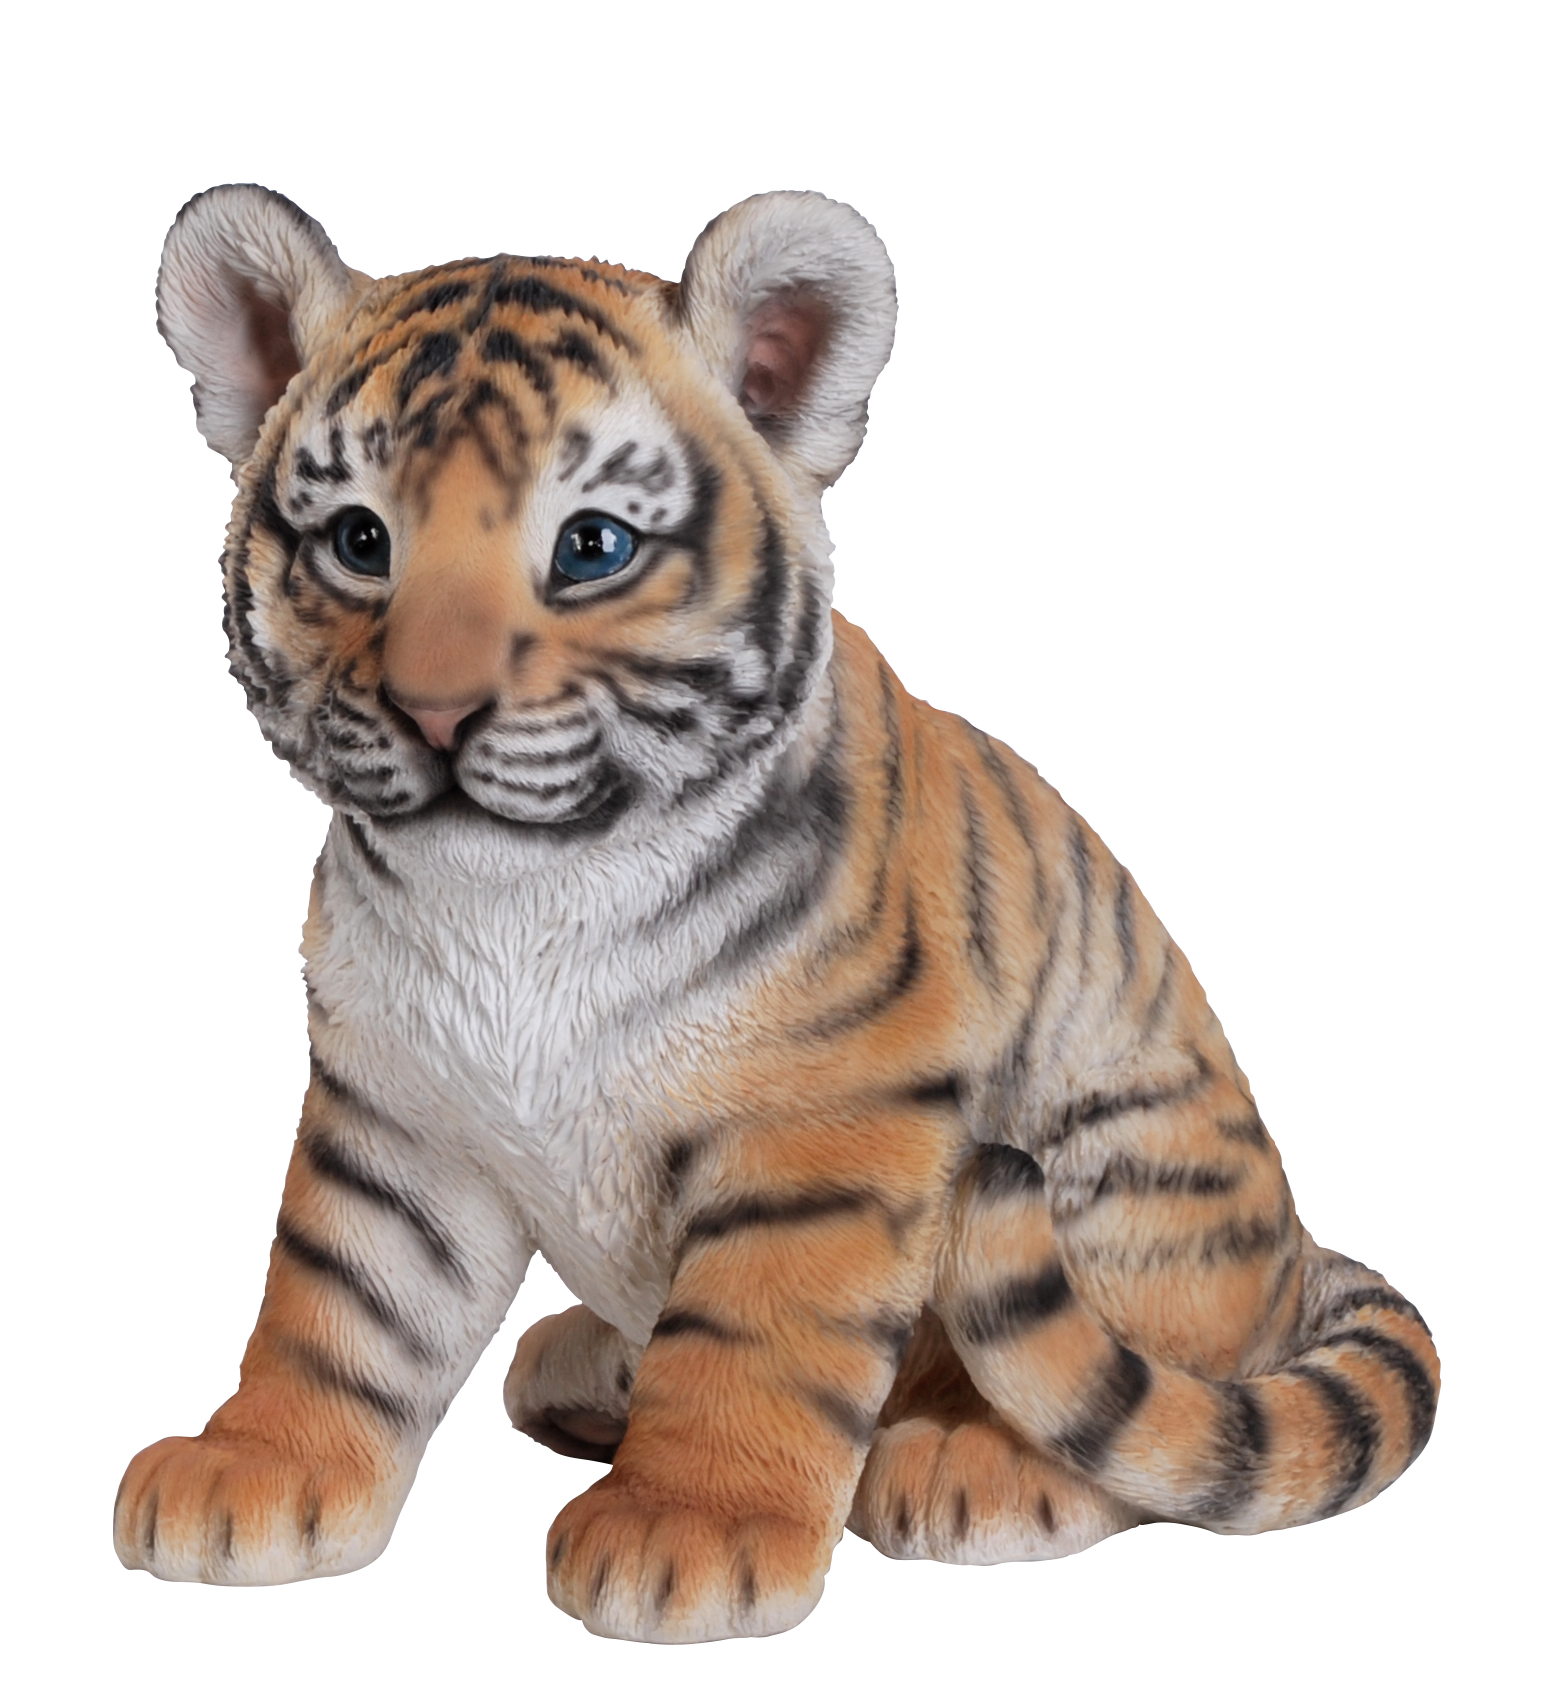 Tiger-Cub-baby-triger-photo, PNG Cub - Free PNG